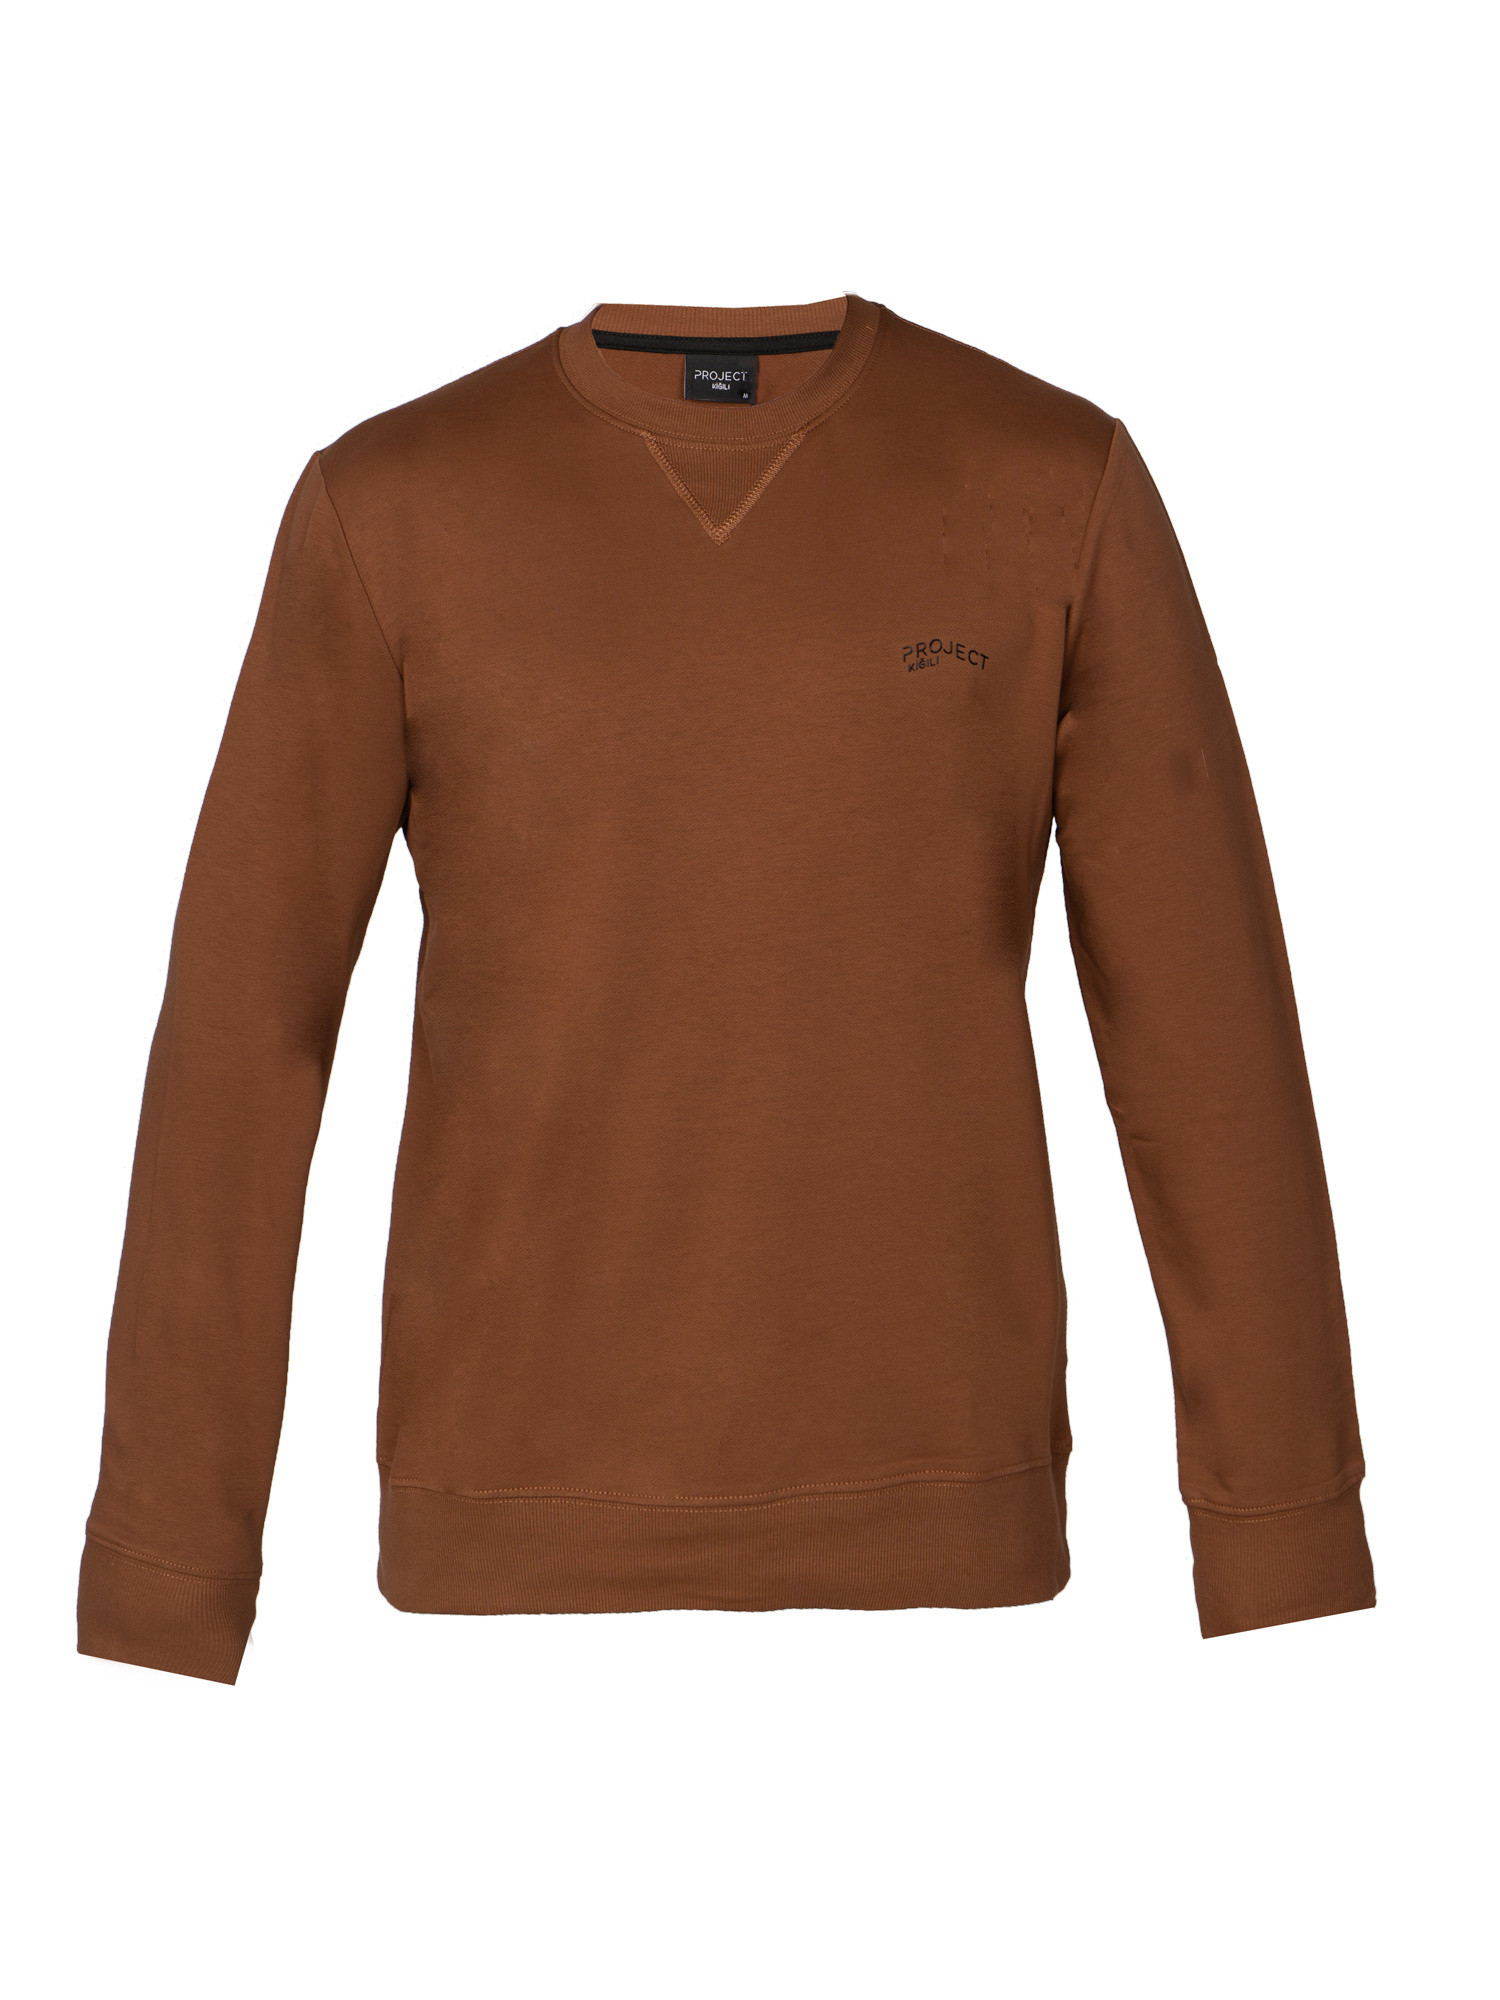 Project sweatshirt, Brown, large image number 0